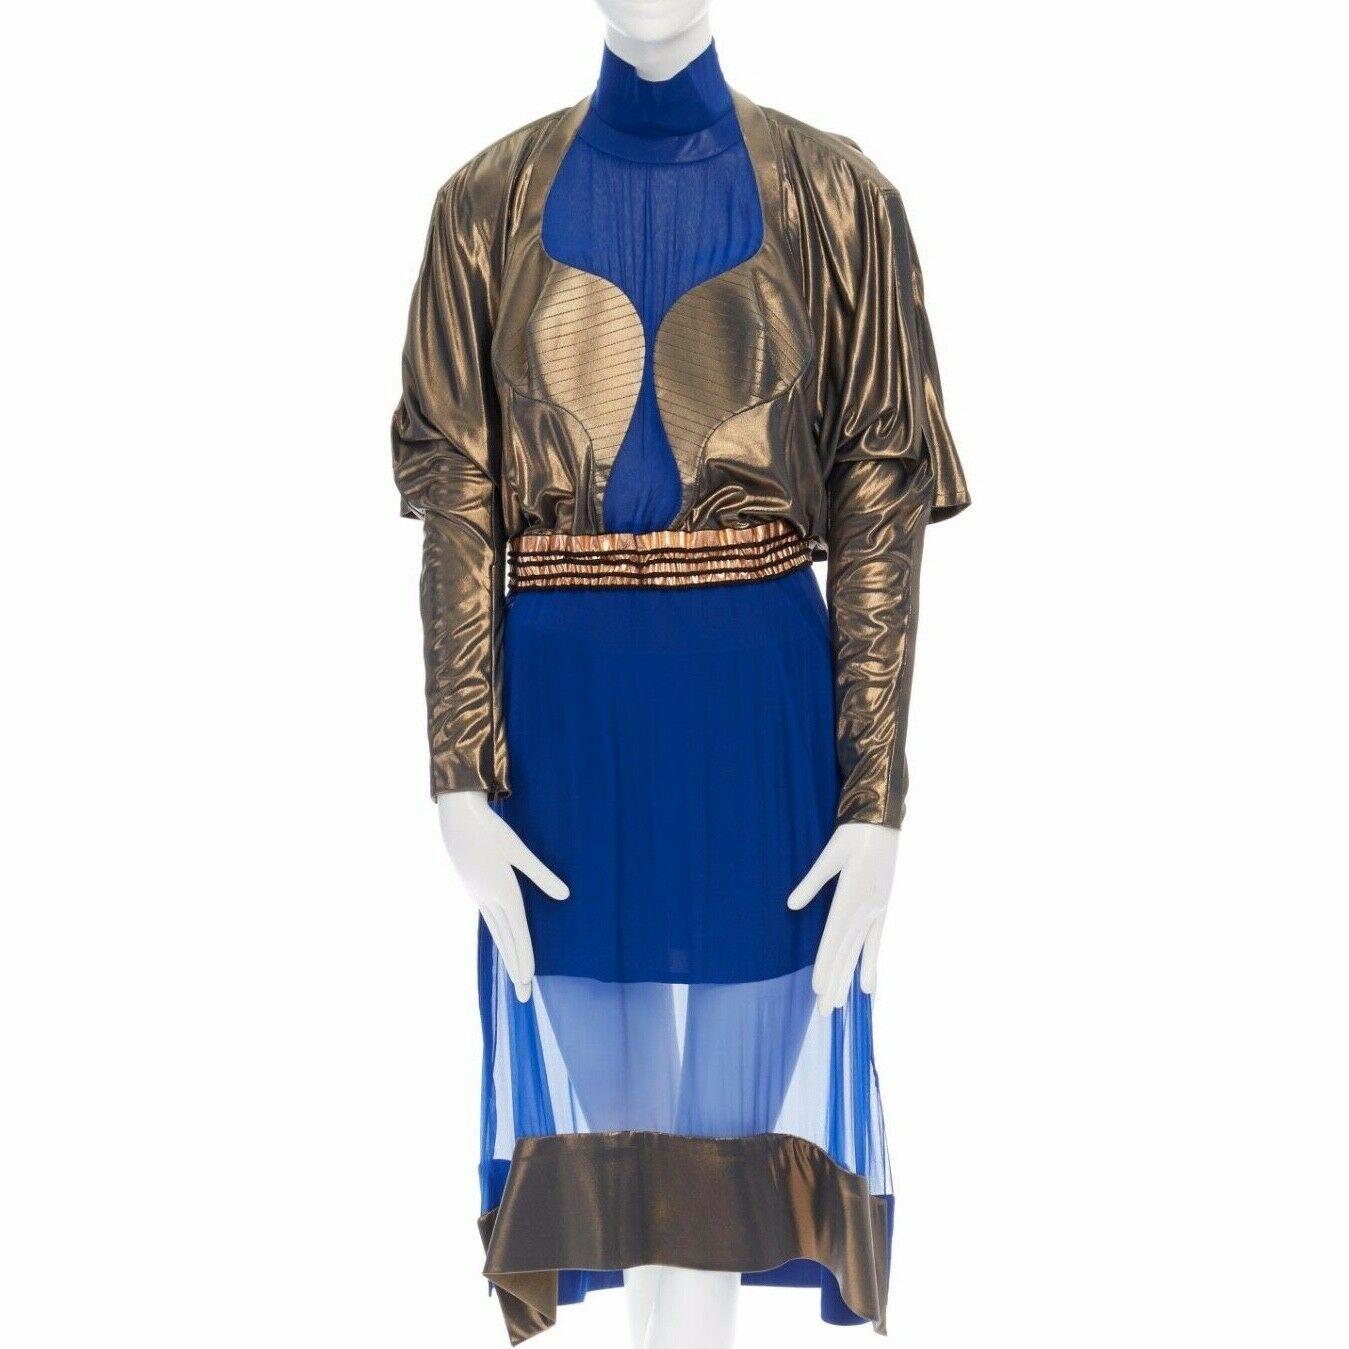 runway BALENCIAGA GHESQUIERE AW12 blue copper futuristic silk dress FR36 US4 UK8

BALENCIAGA by NICHOLAS GHESQUIERE
FROM THE FALL WINTER 2012 RUNWAY
SILK, RAYON, COTTON, AGNELLO, POLYESTER, POLYURETHANE . 
BLUE SILK BASE . SCULPTED BUST . MOCK HIGH